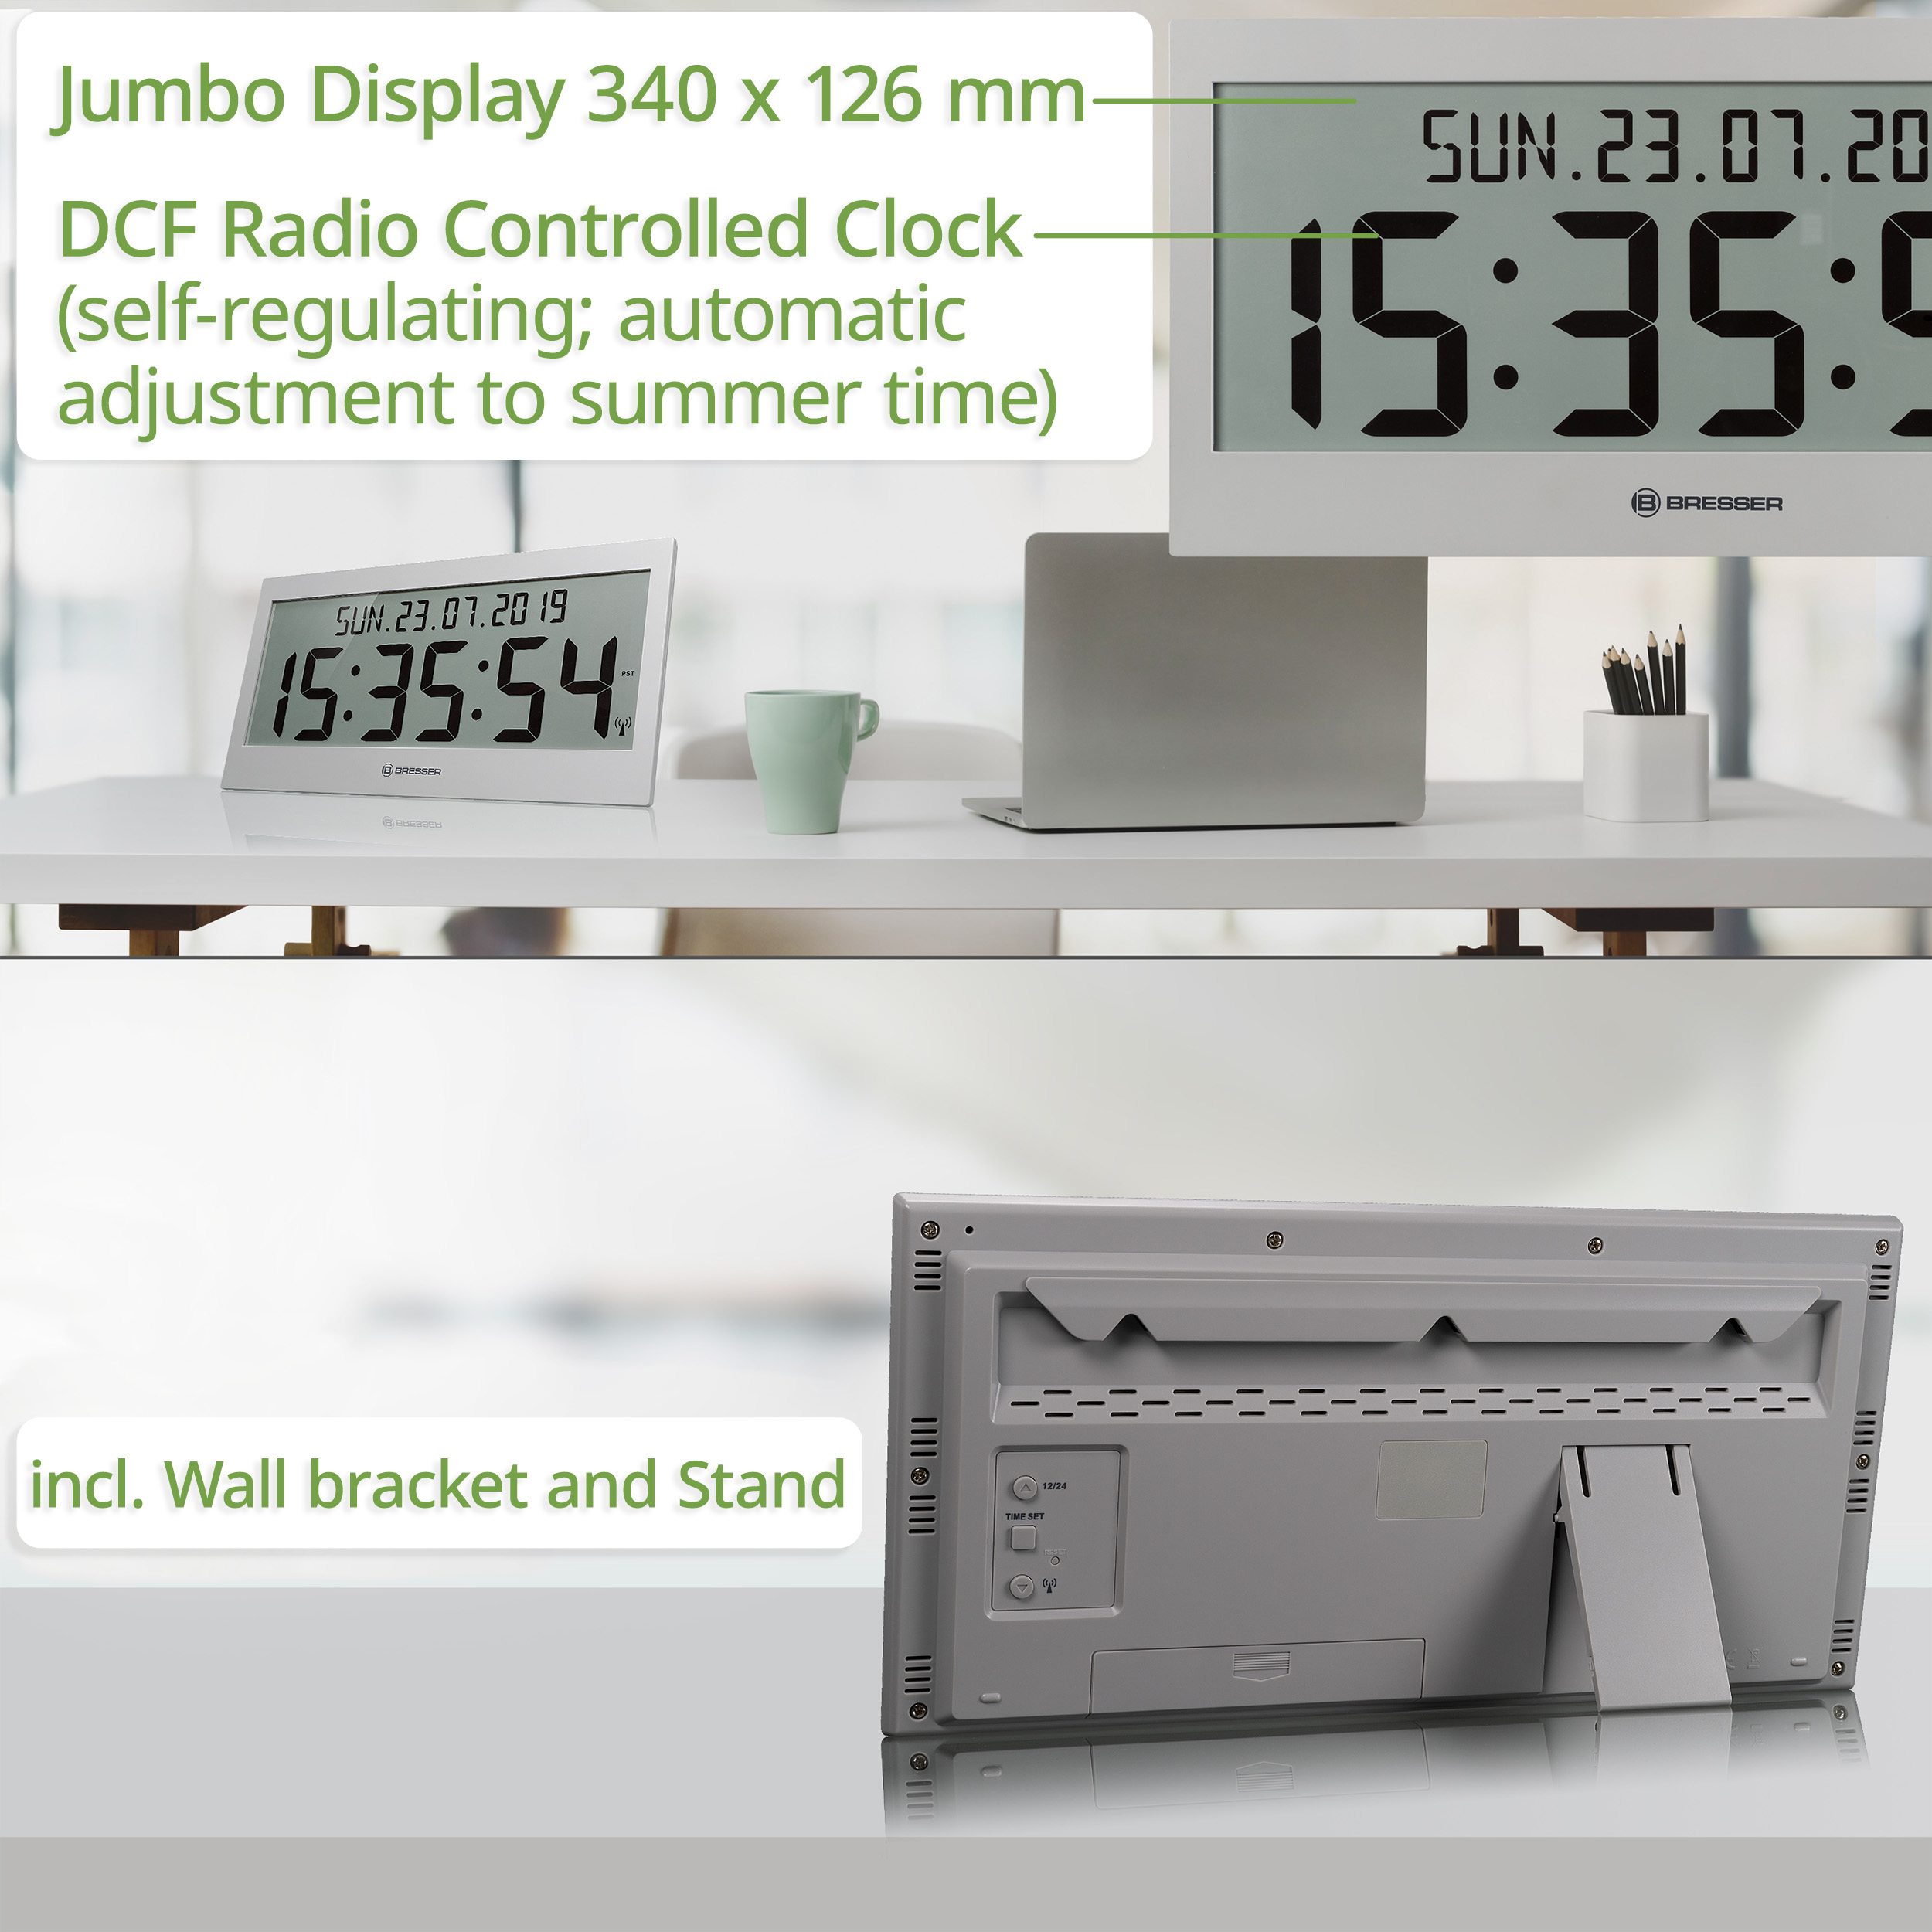 Reloj de pared BRESSER LCD Jumbo controlado por radio DCF